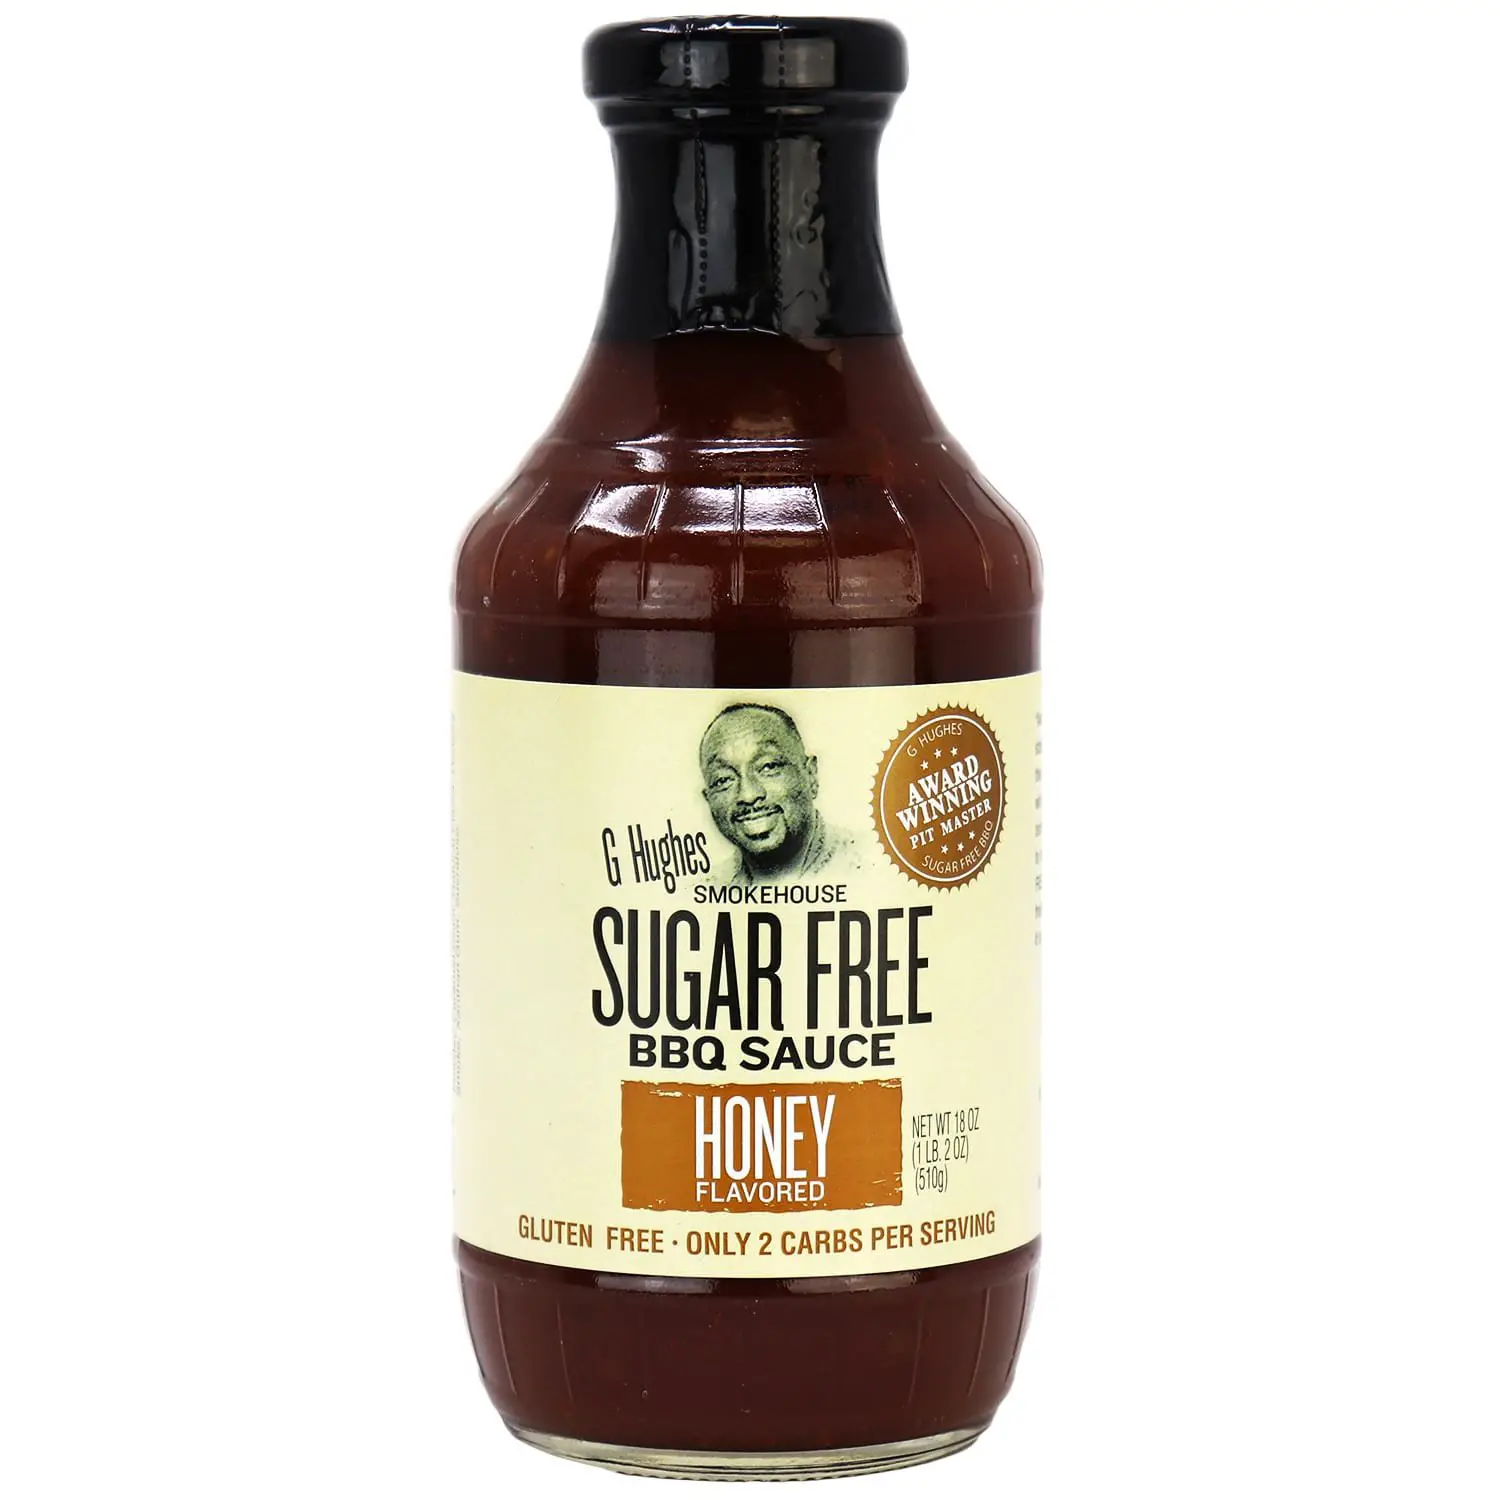 G Hughes Sugar Free BBQ Sauce Honey Keto